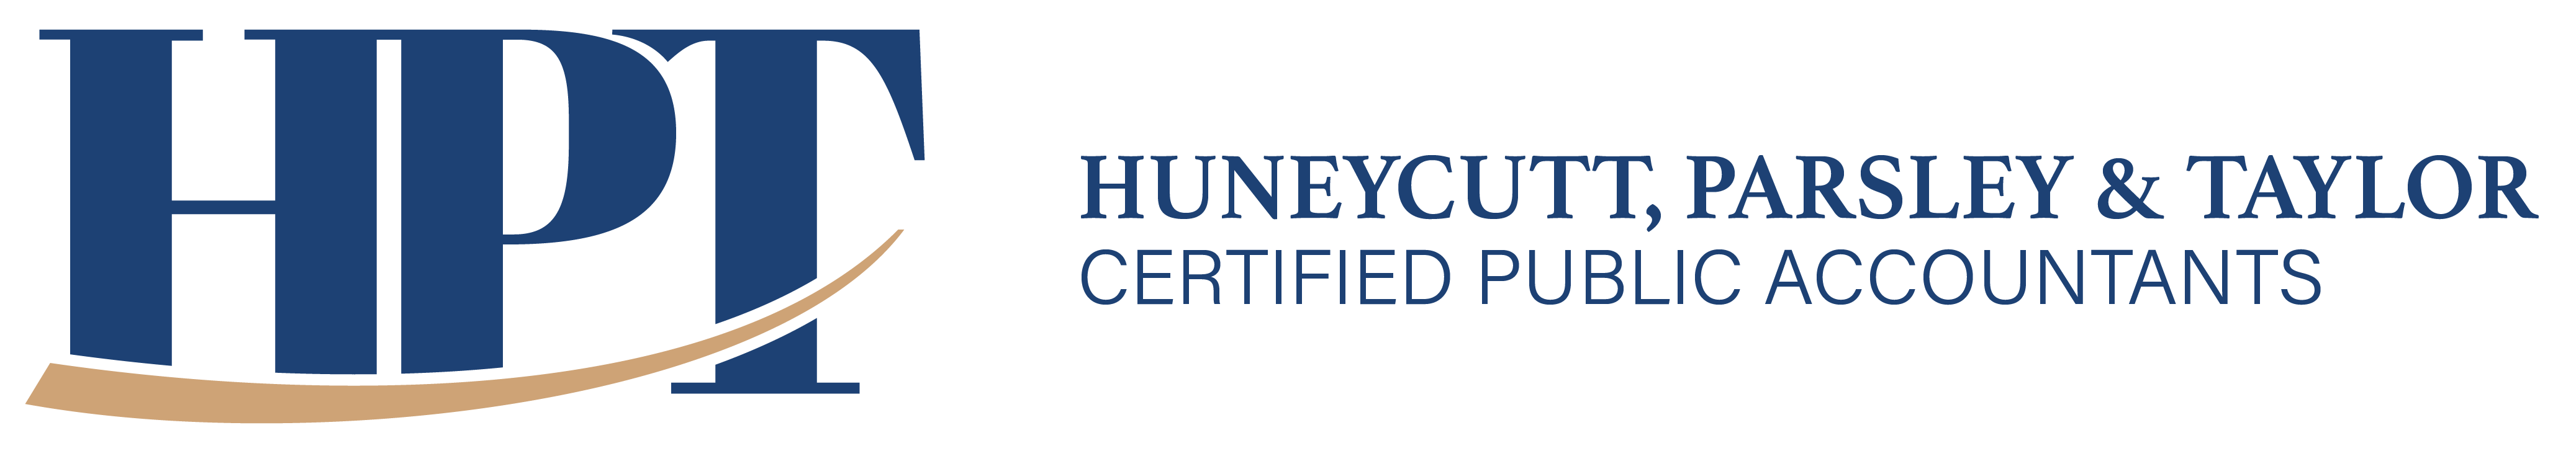 HPT: Honeycutt, Parsley & Taylor, Certified Public Accountants Logo